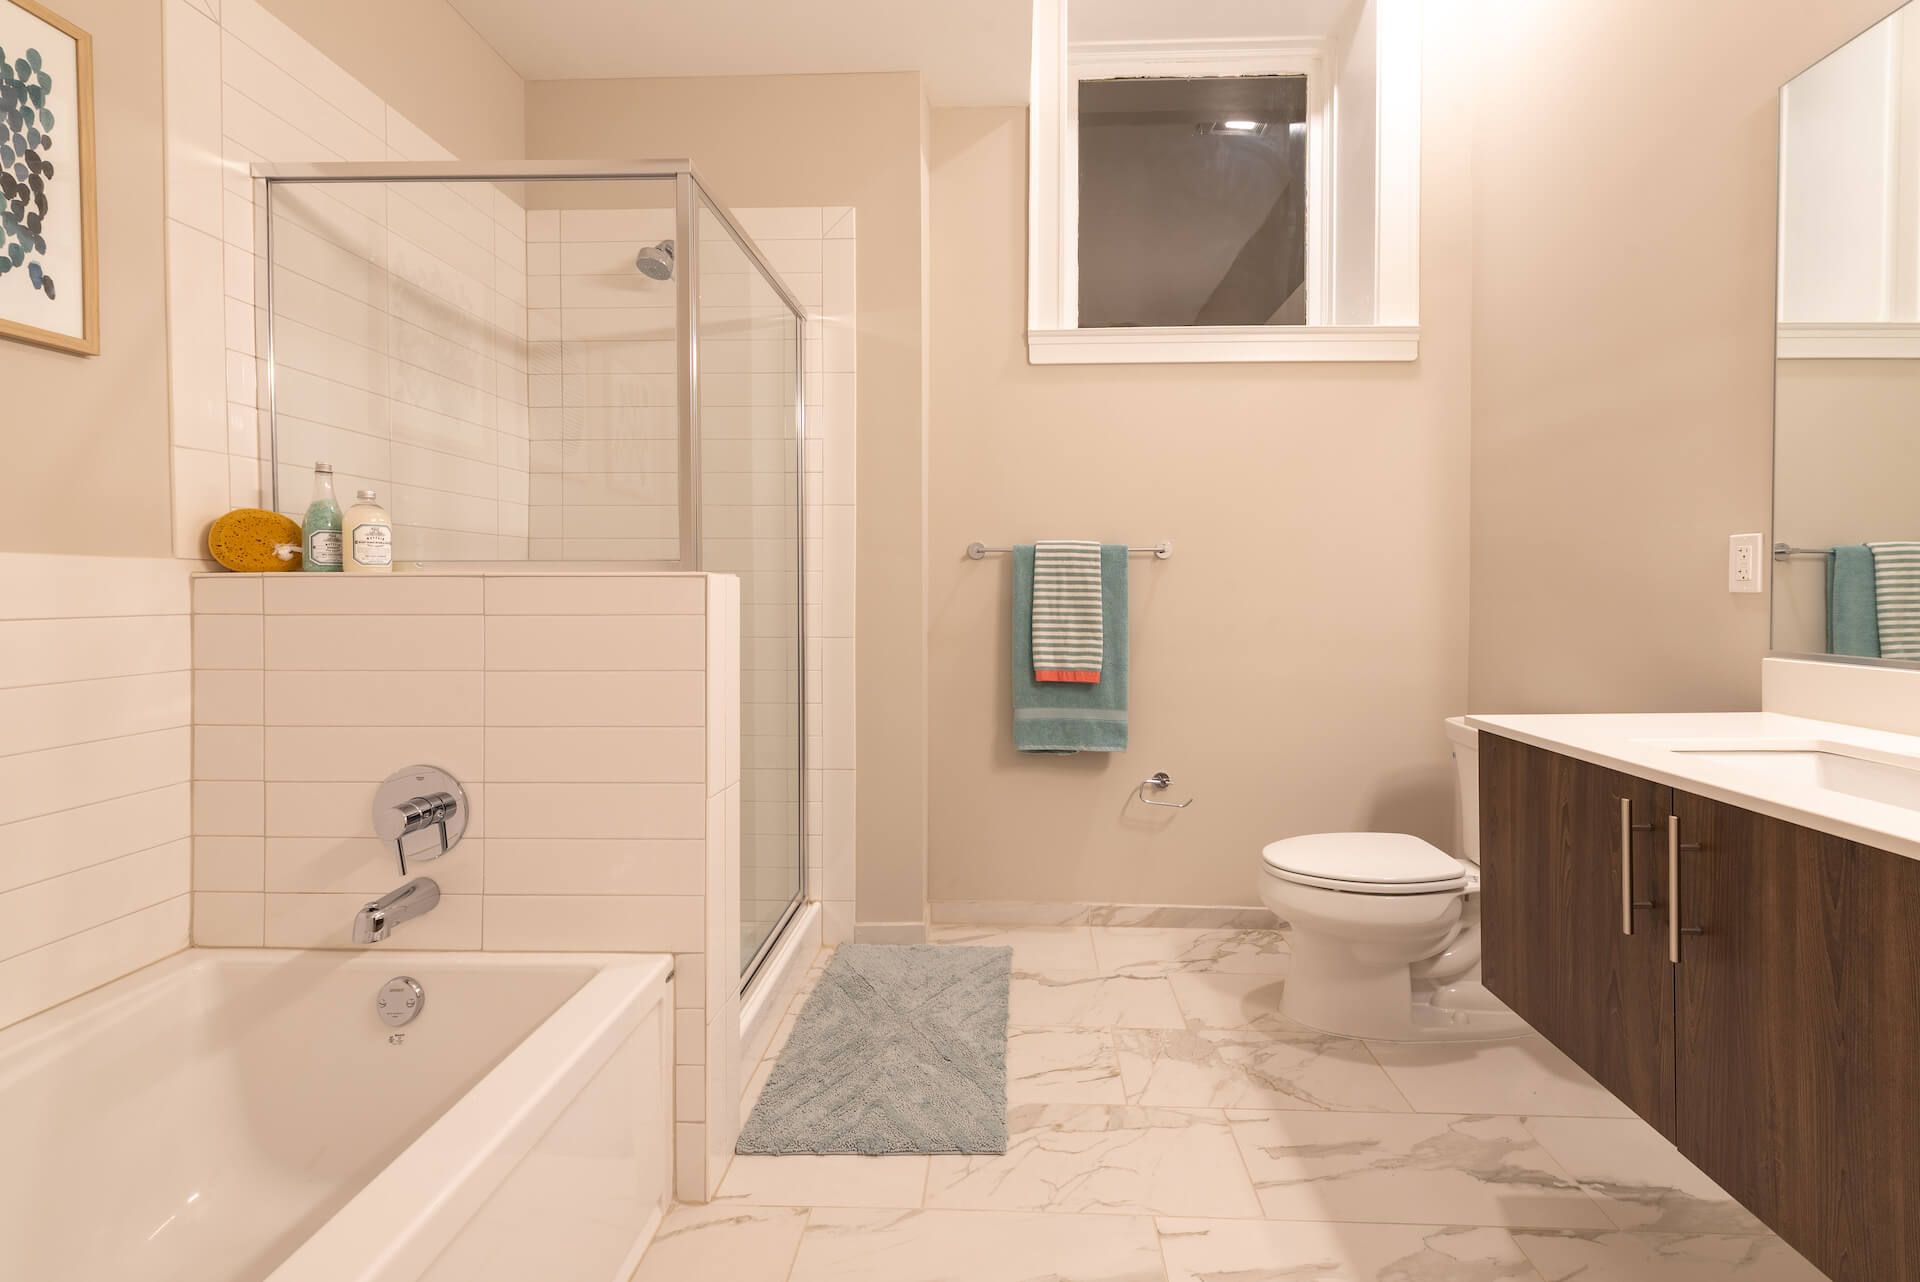 Spacious bathroom with custom vanity, bathtub, glass shower, and marble style tile.